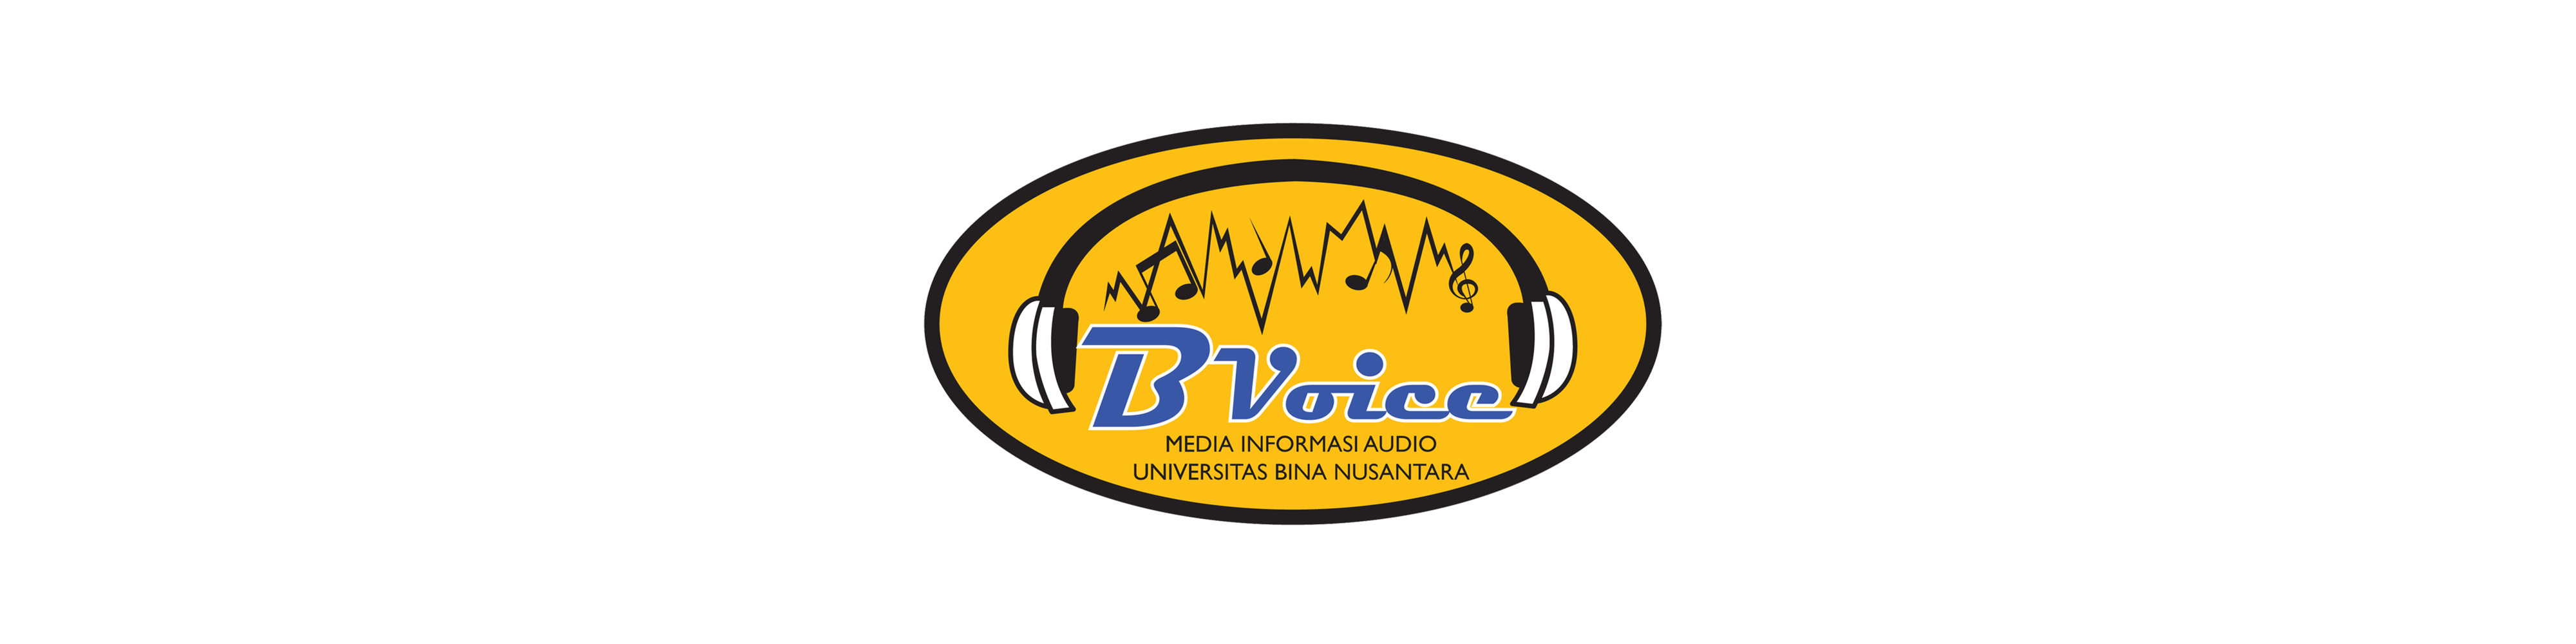 cropped-Logo-BVoice-2.png